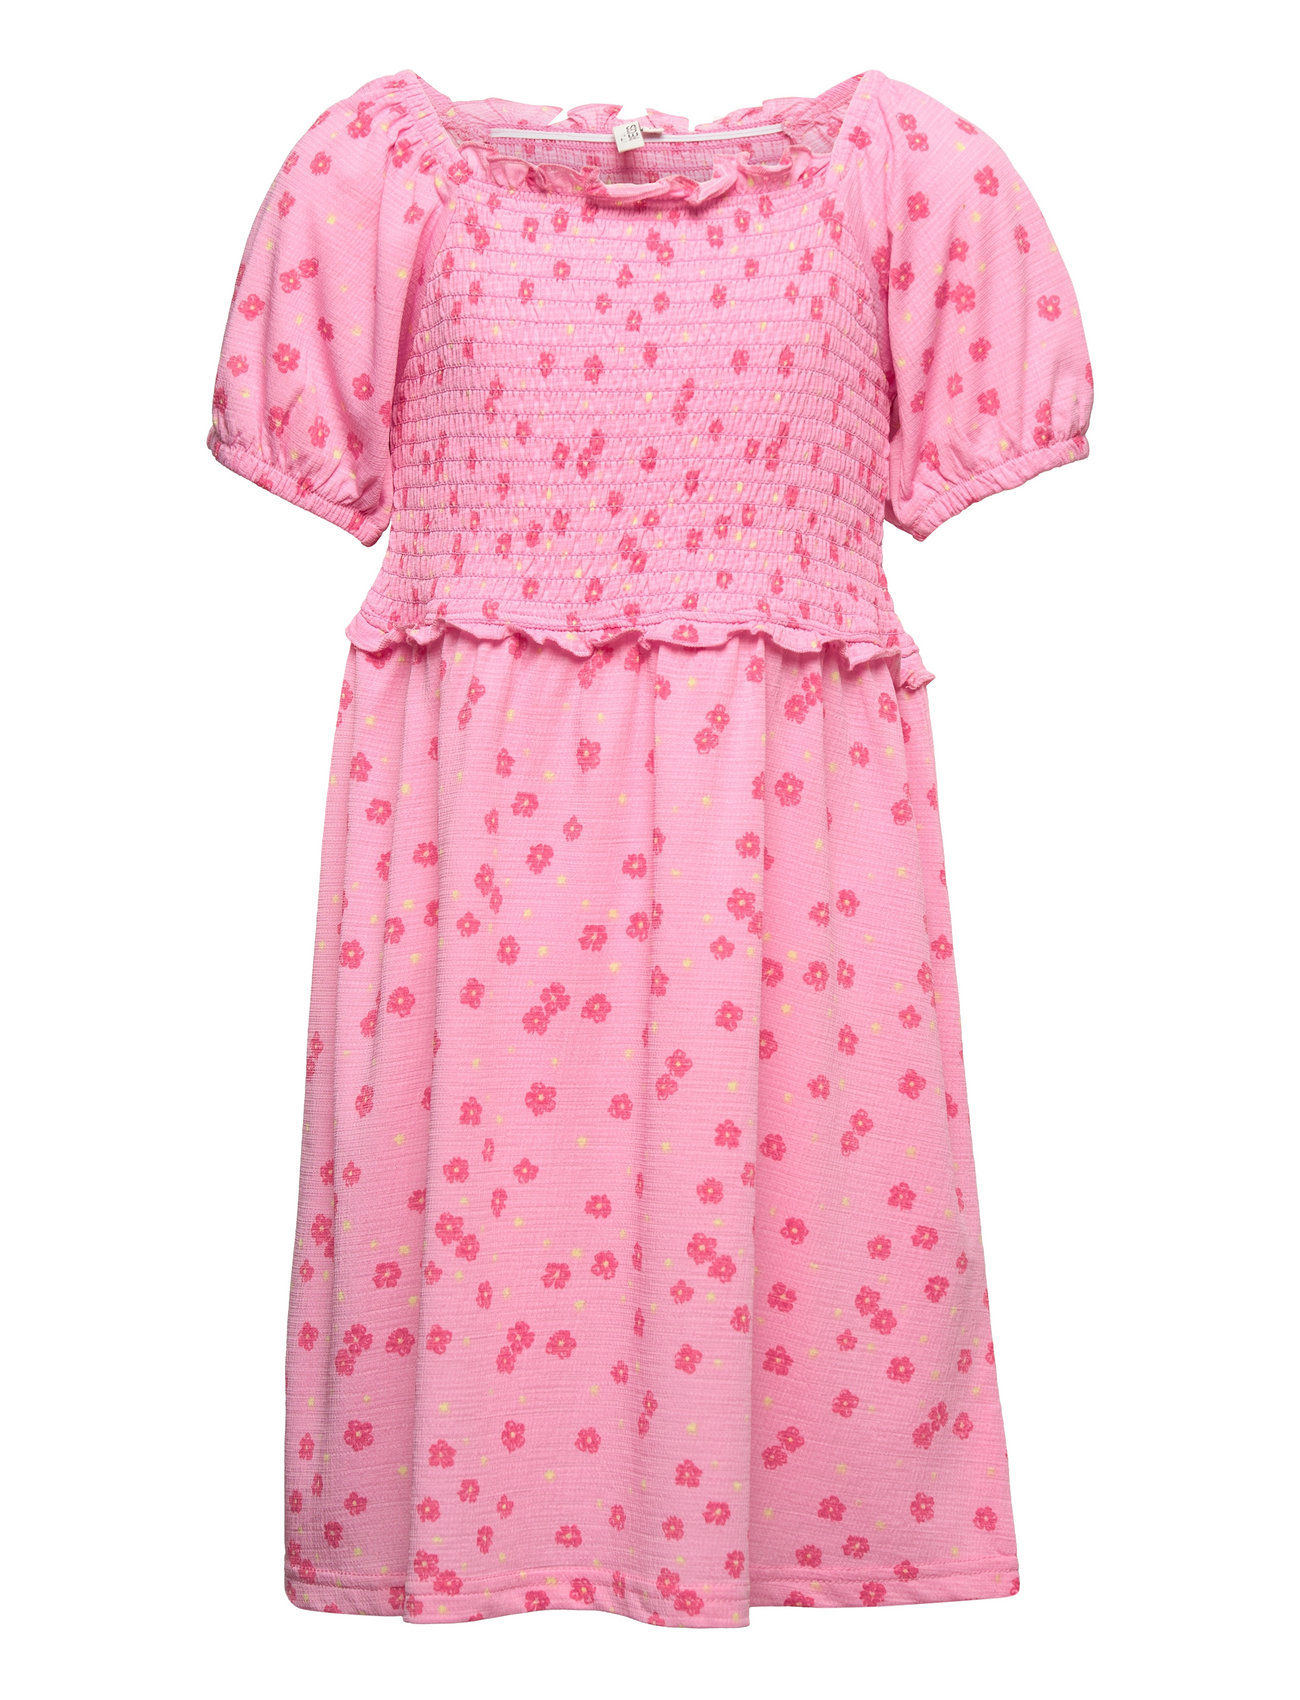 Lptaylin Smock Dress Tw Dresses & Skirts Dresses Casual Dresses Short-sleeved Casual Dresses Pink Little Pieces